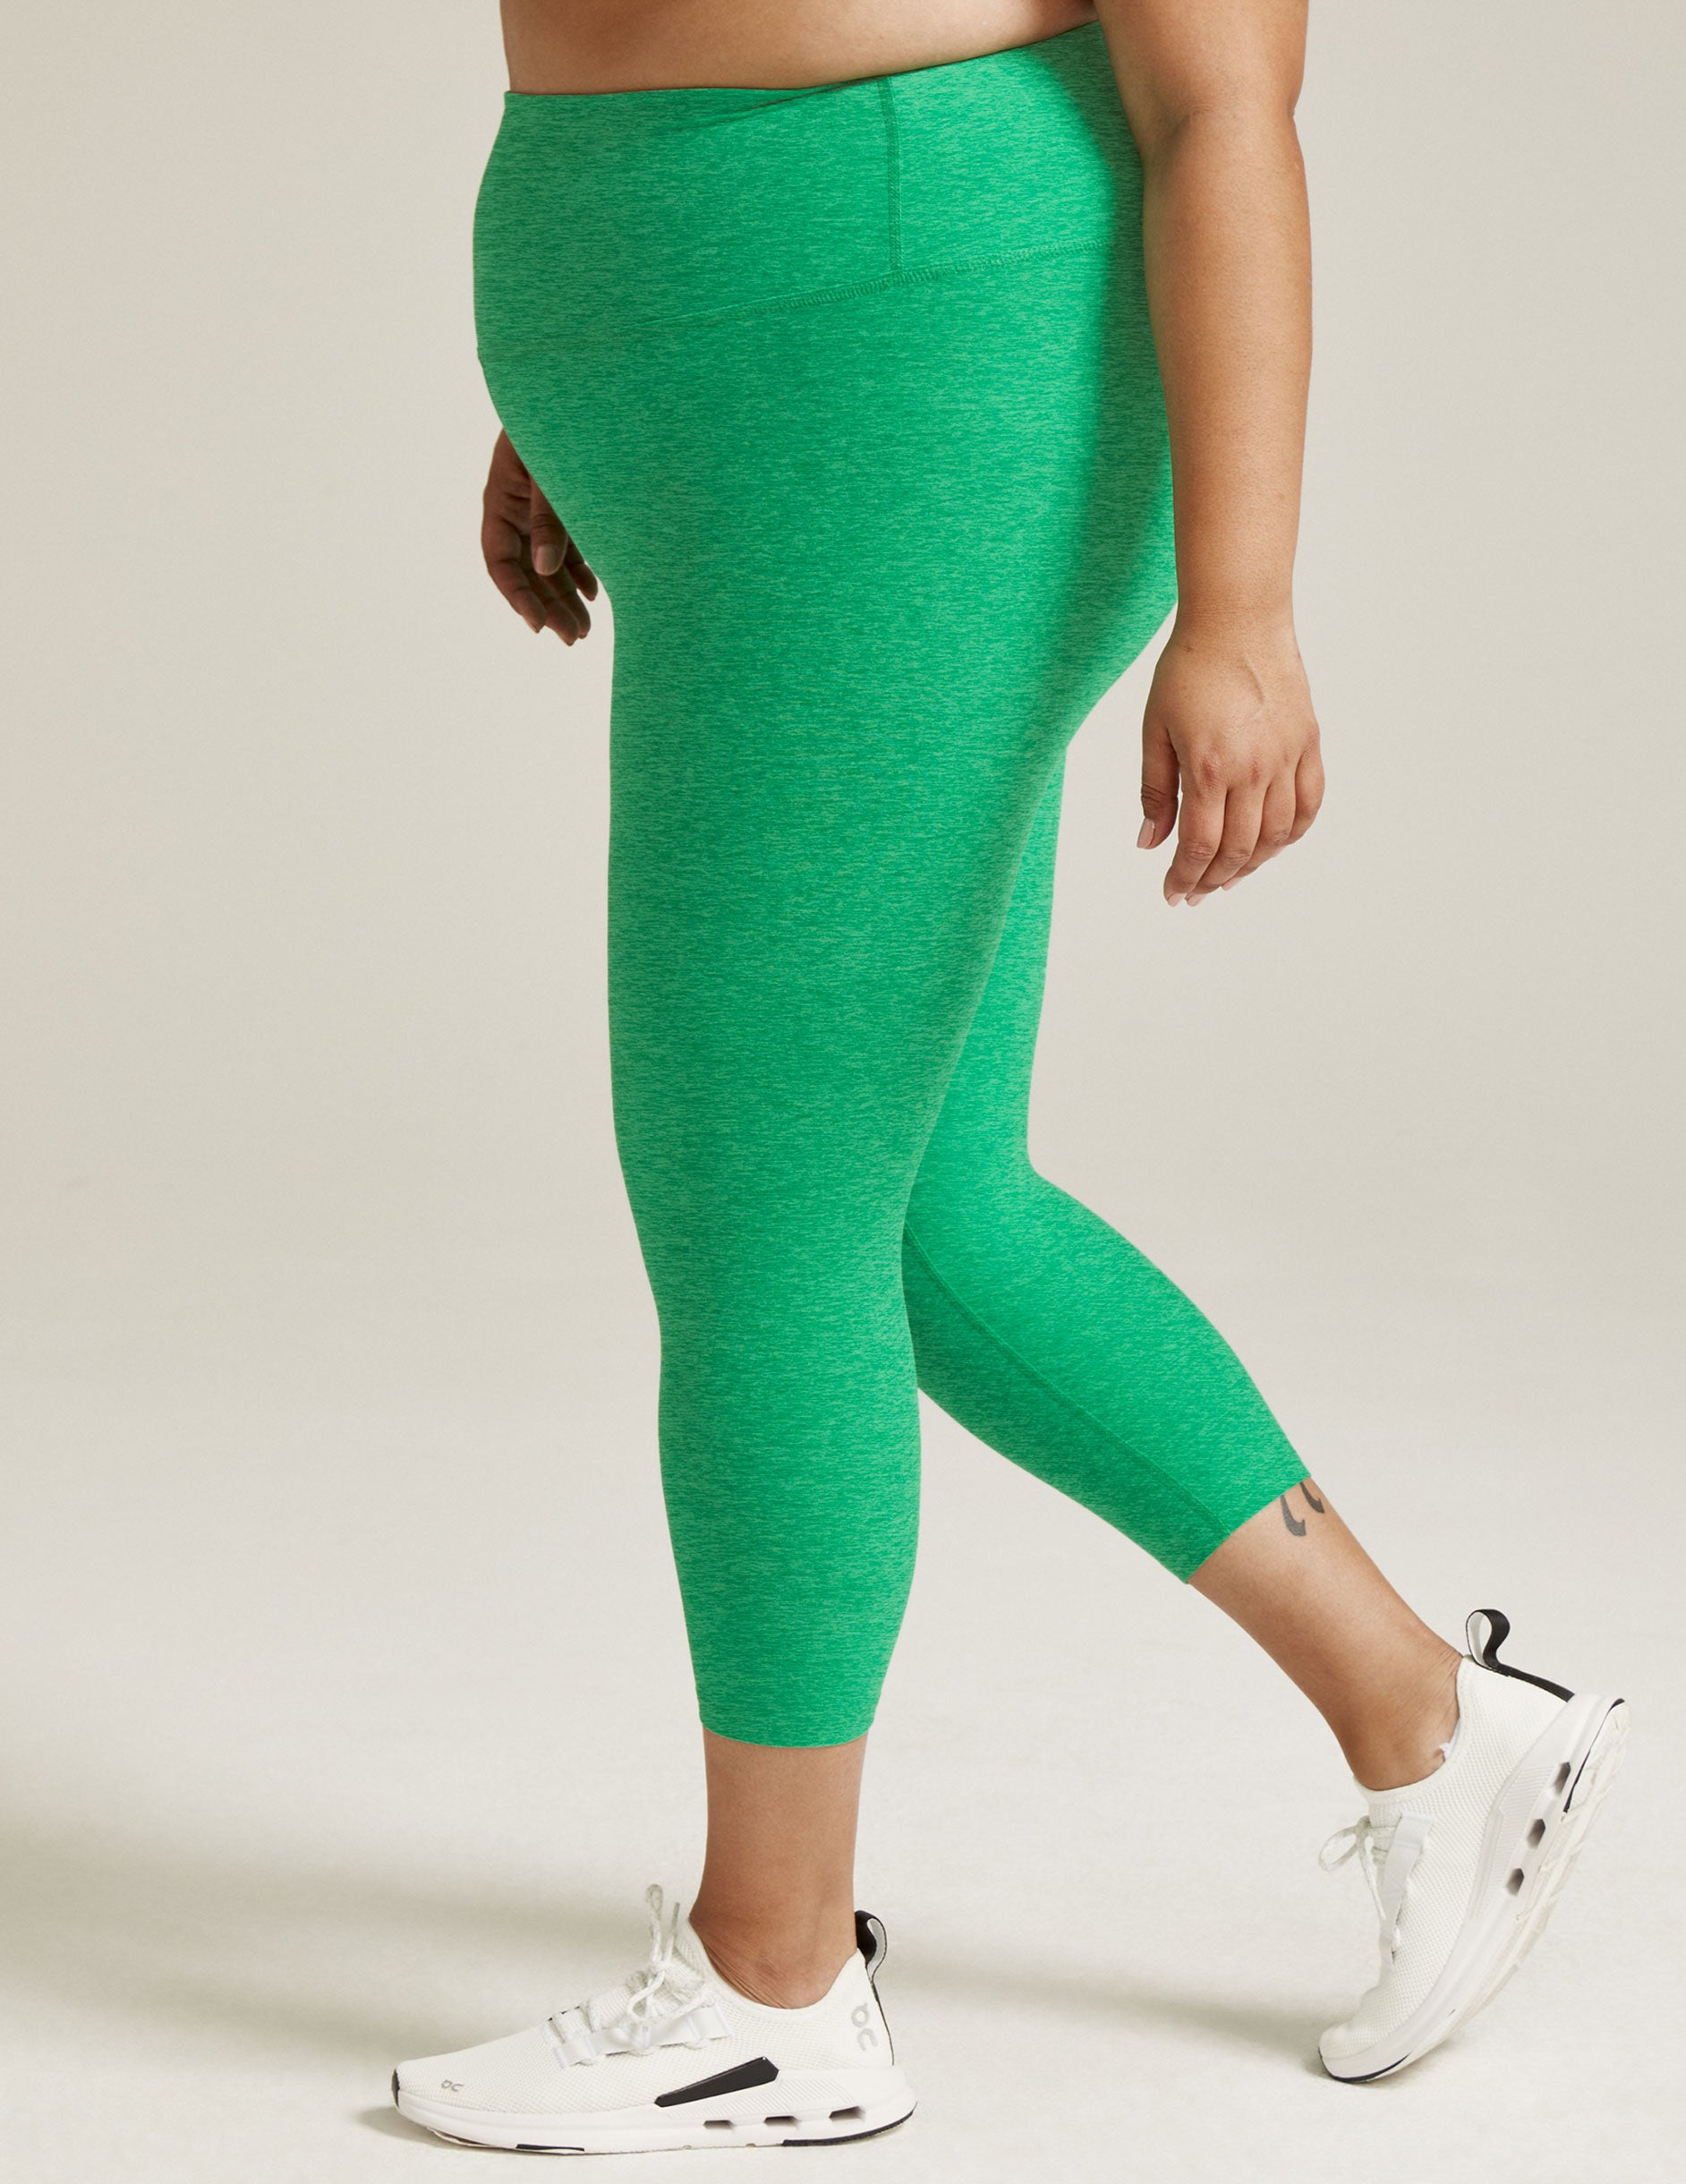 Yogalicious capri length green leggings. - Depop